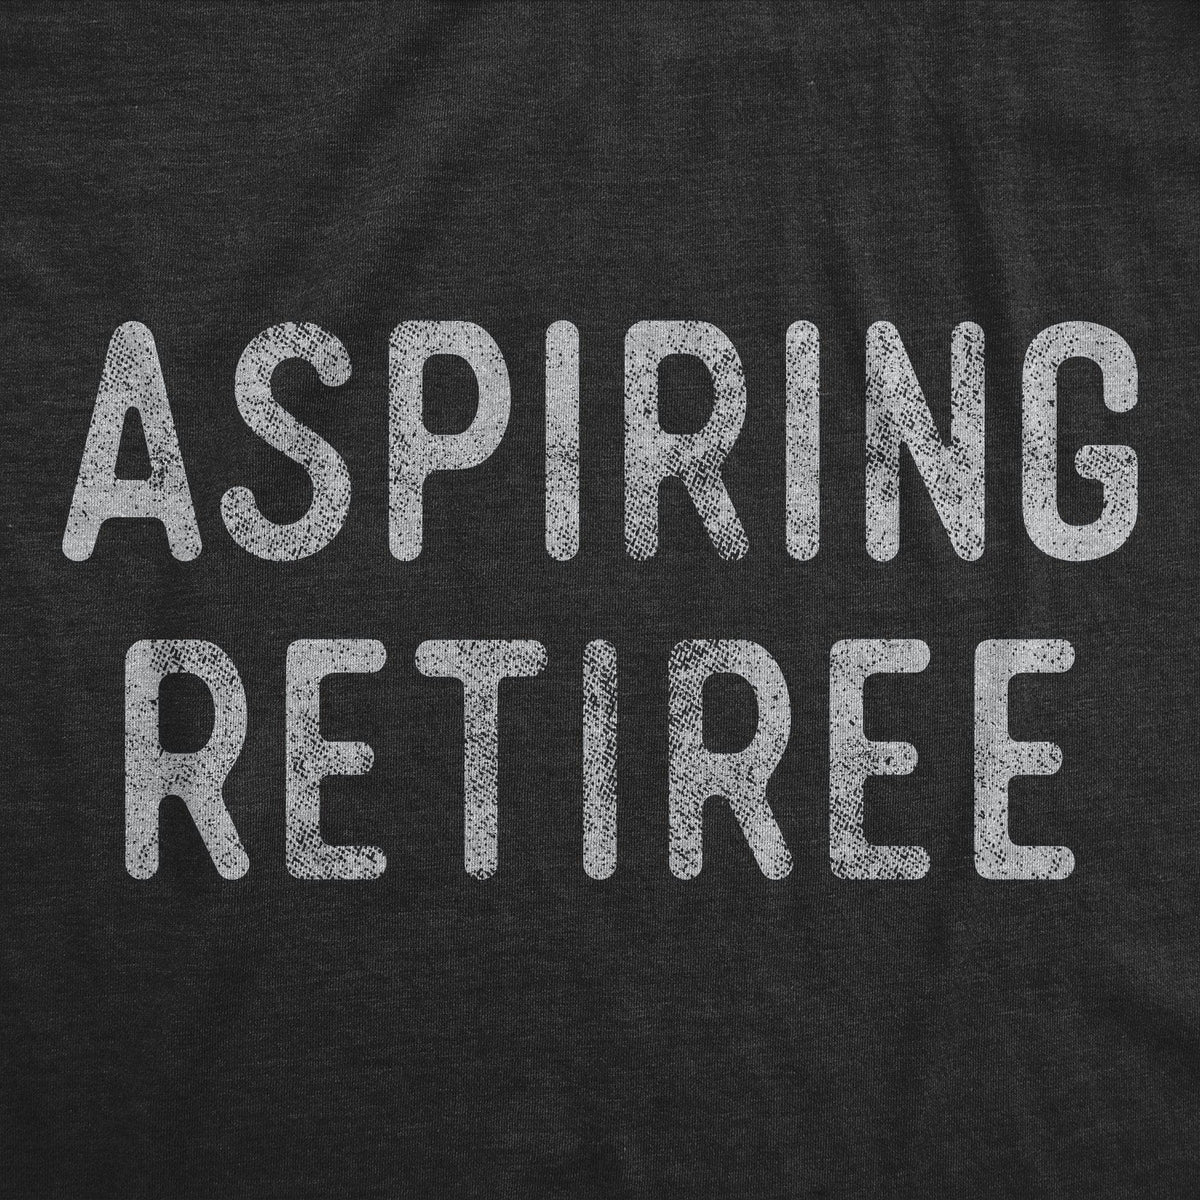 Aspiring Retiree Men&#39;s Tshirt  -  Crazy Dog T-Shirts